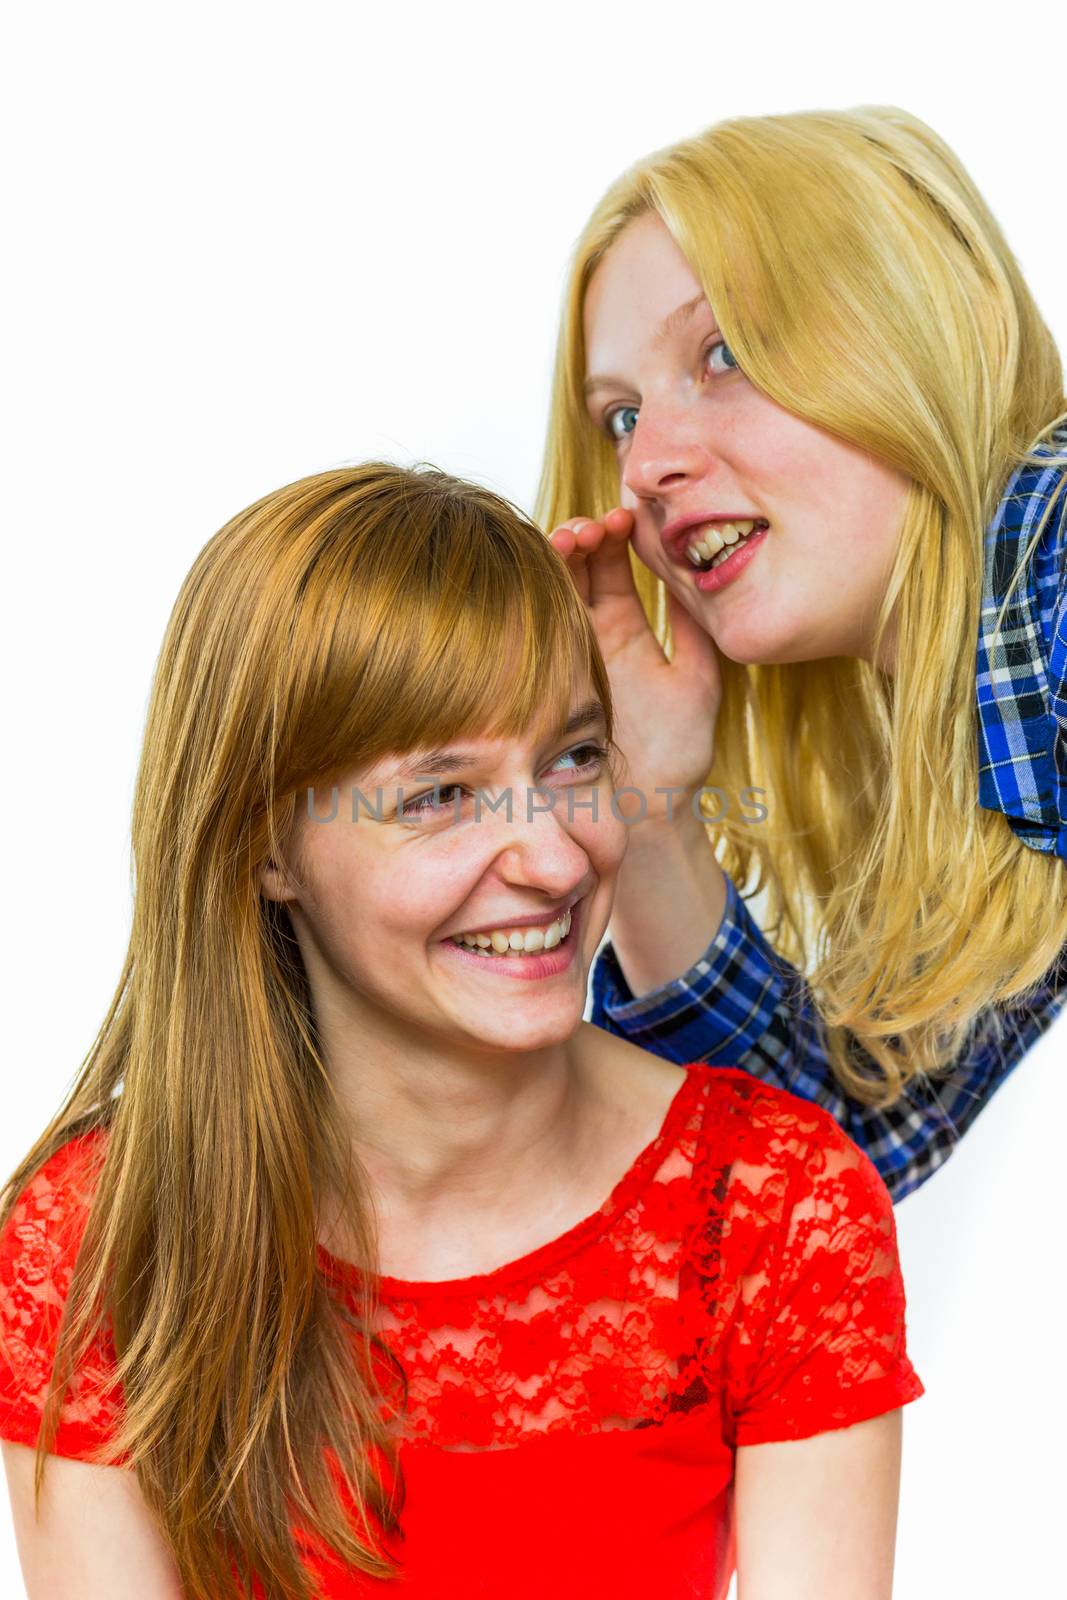 Blonde girl whispering in ear of redhead girlfriend by BenSchonewille